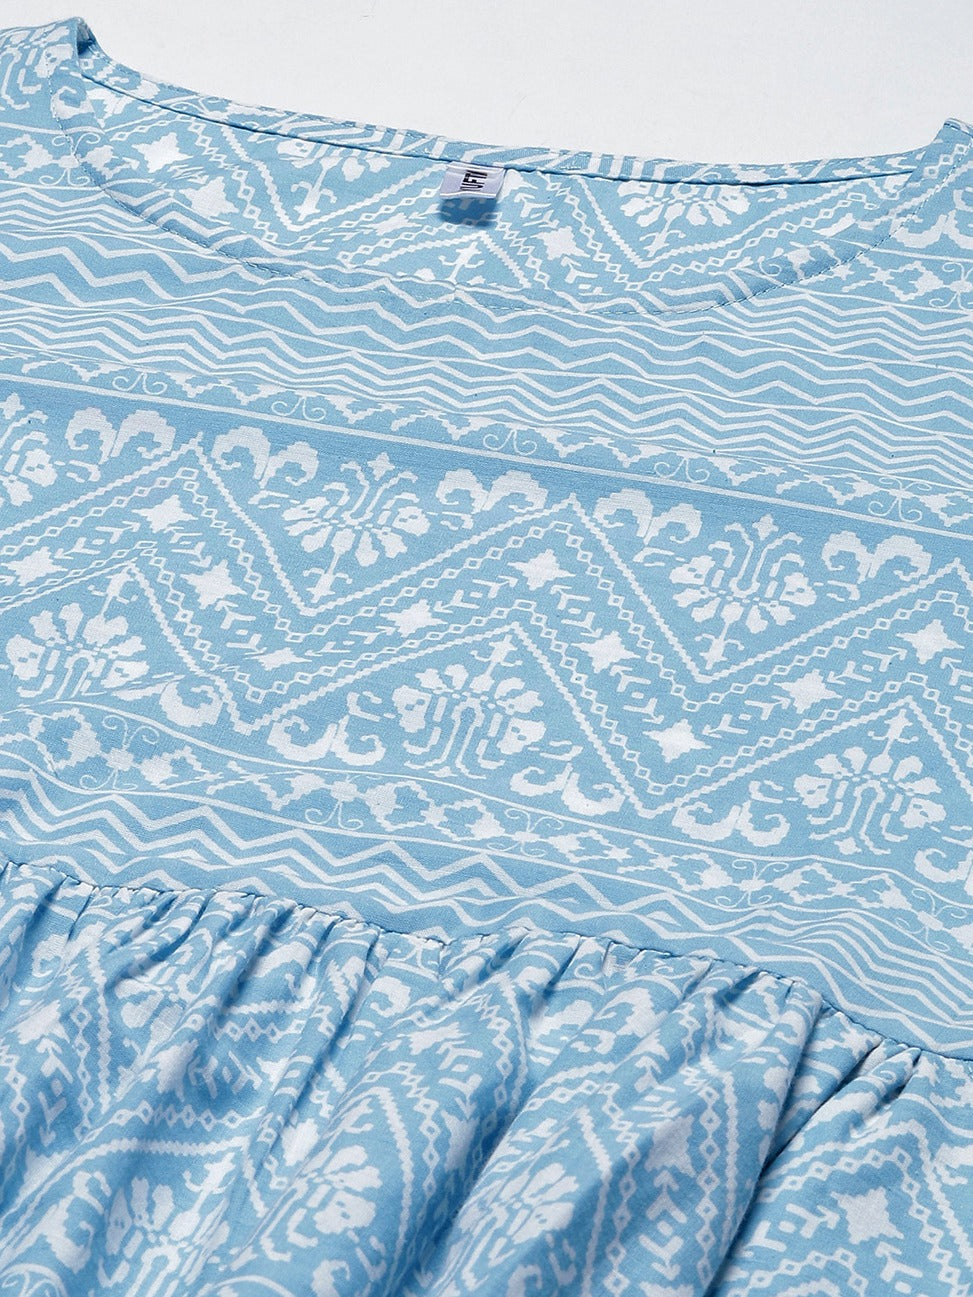 Blue Cotton Ethnic Midi Dress-Yufta Store-9786DRSSBS